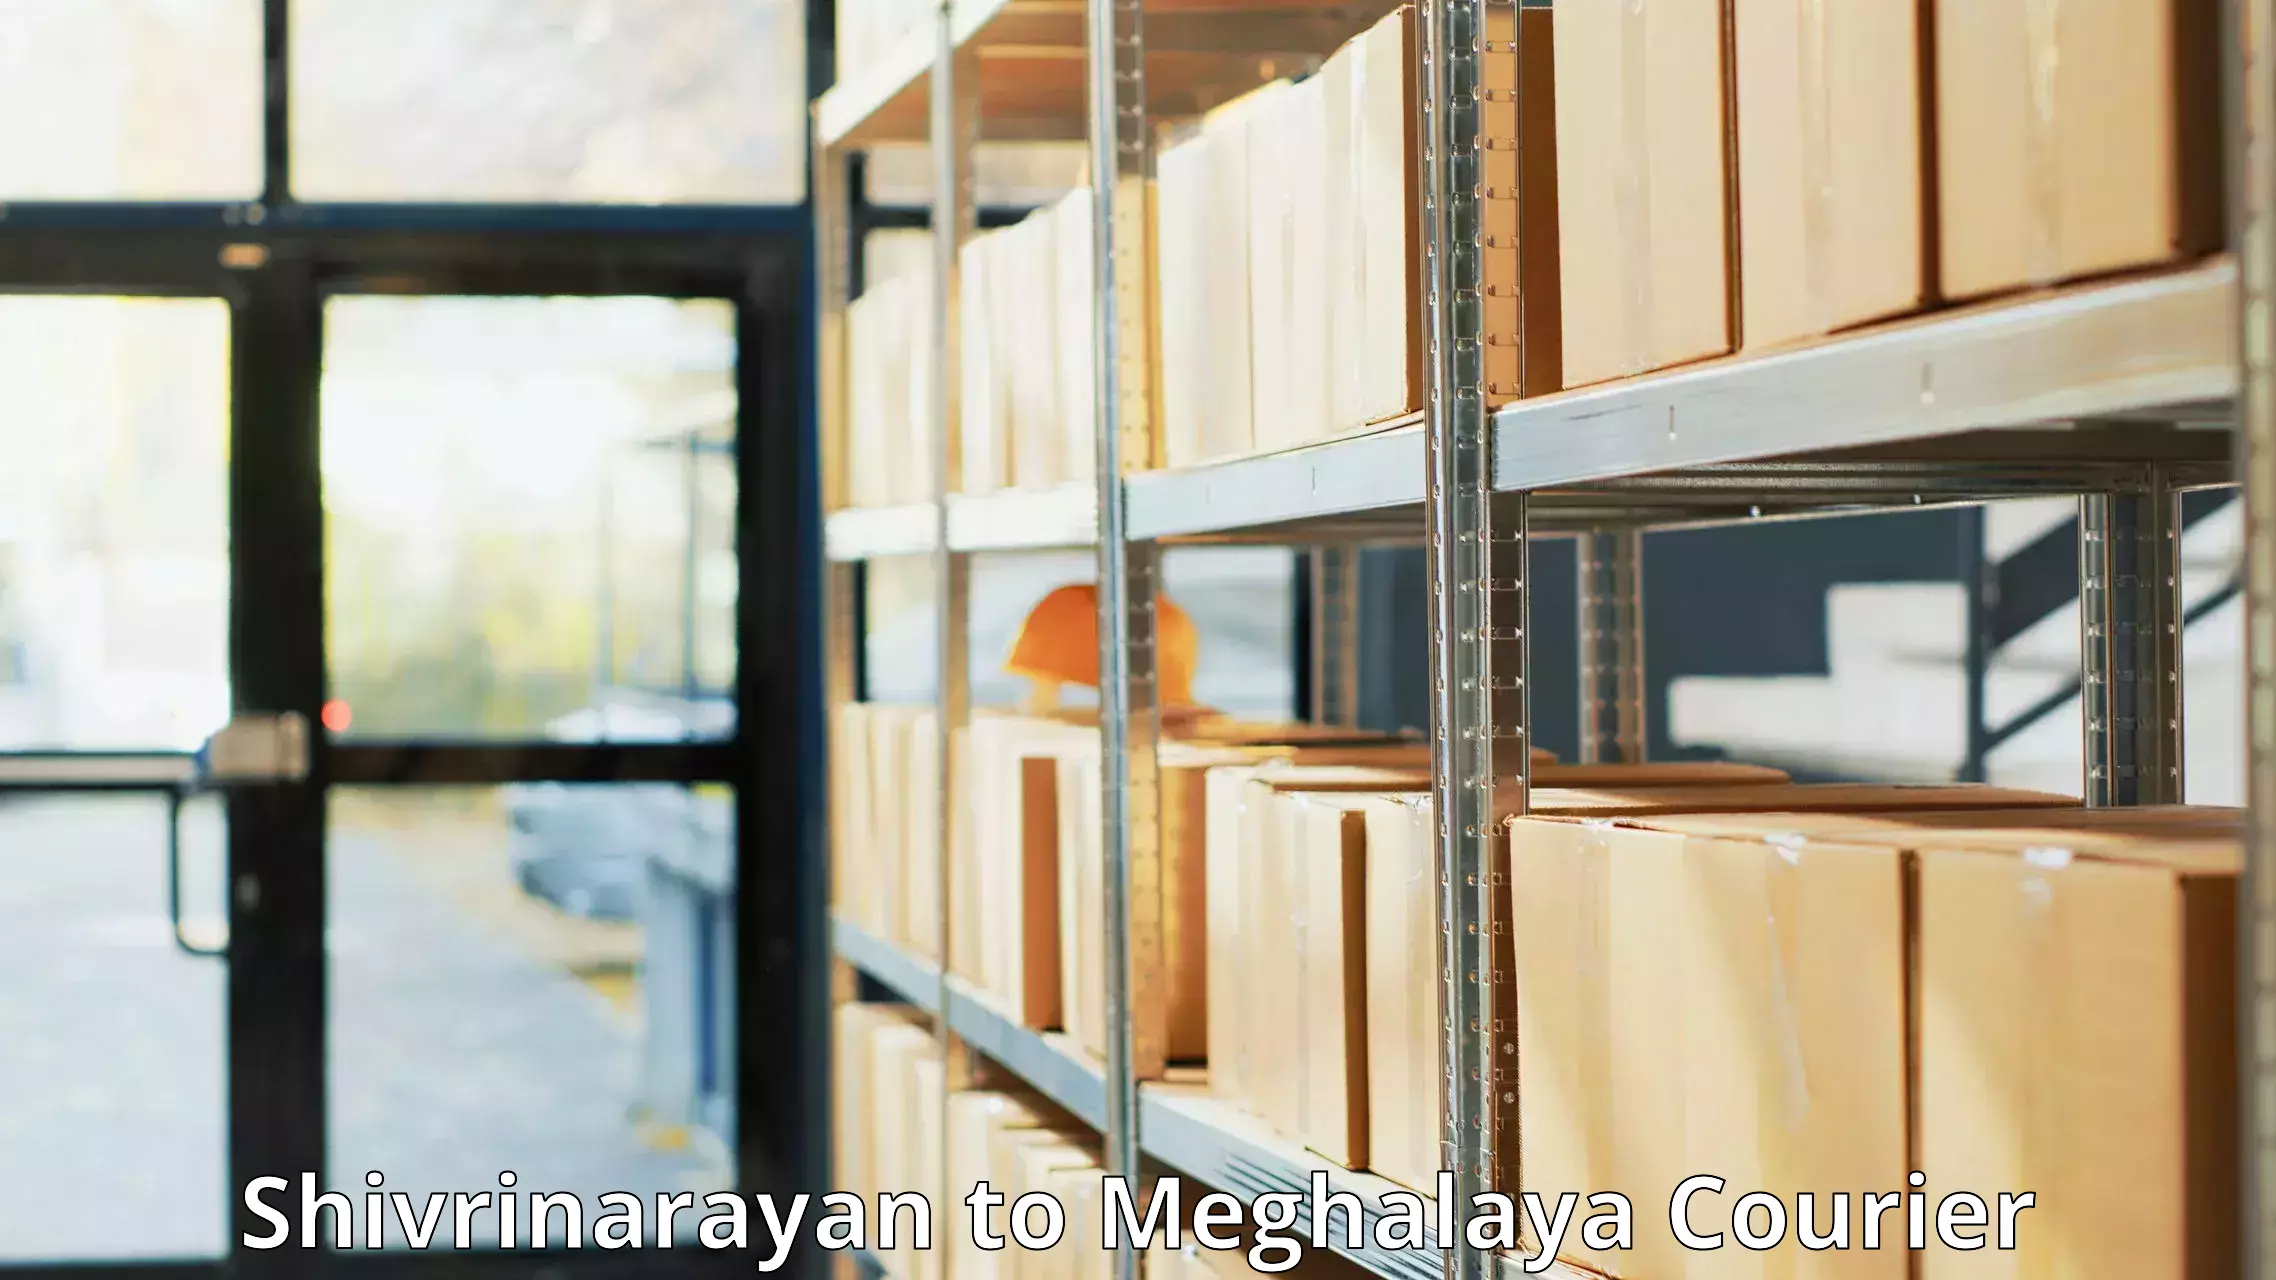 High-speed delivery Shivrinarayan to Meghalaya